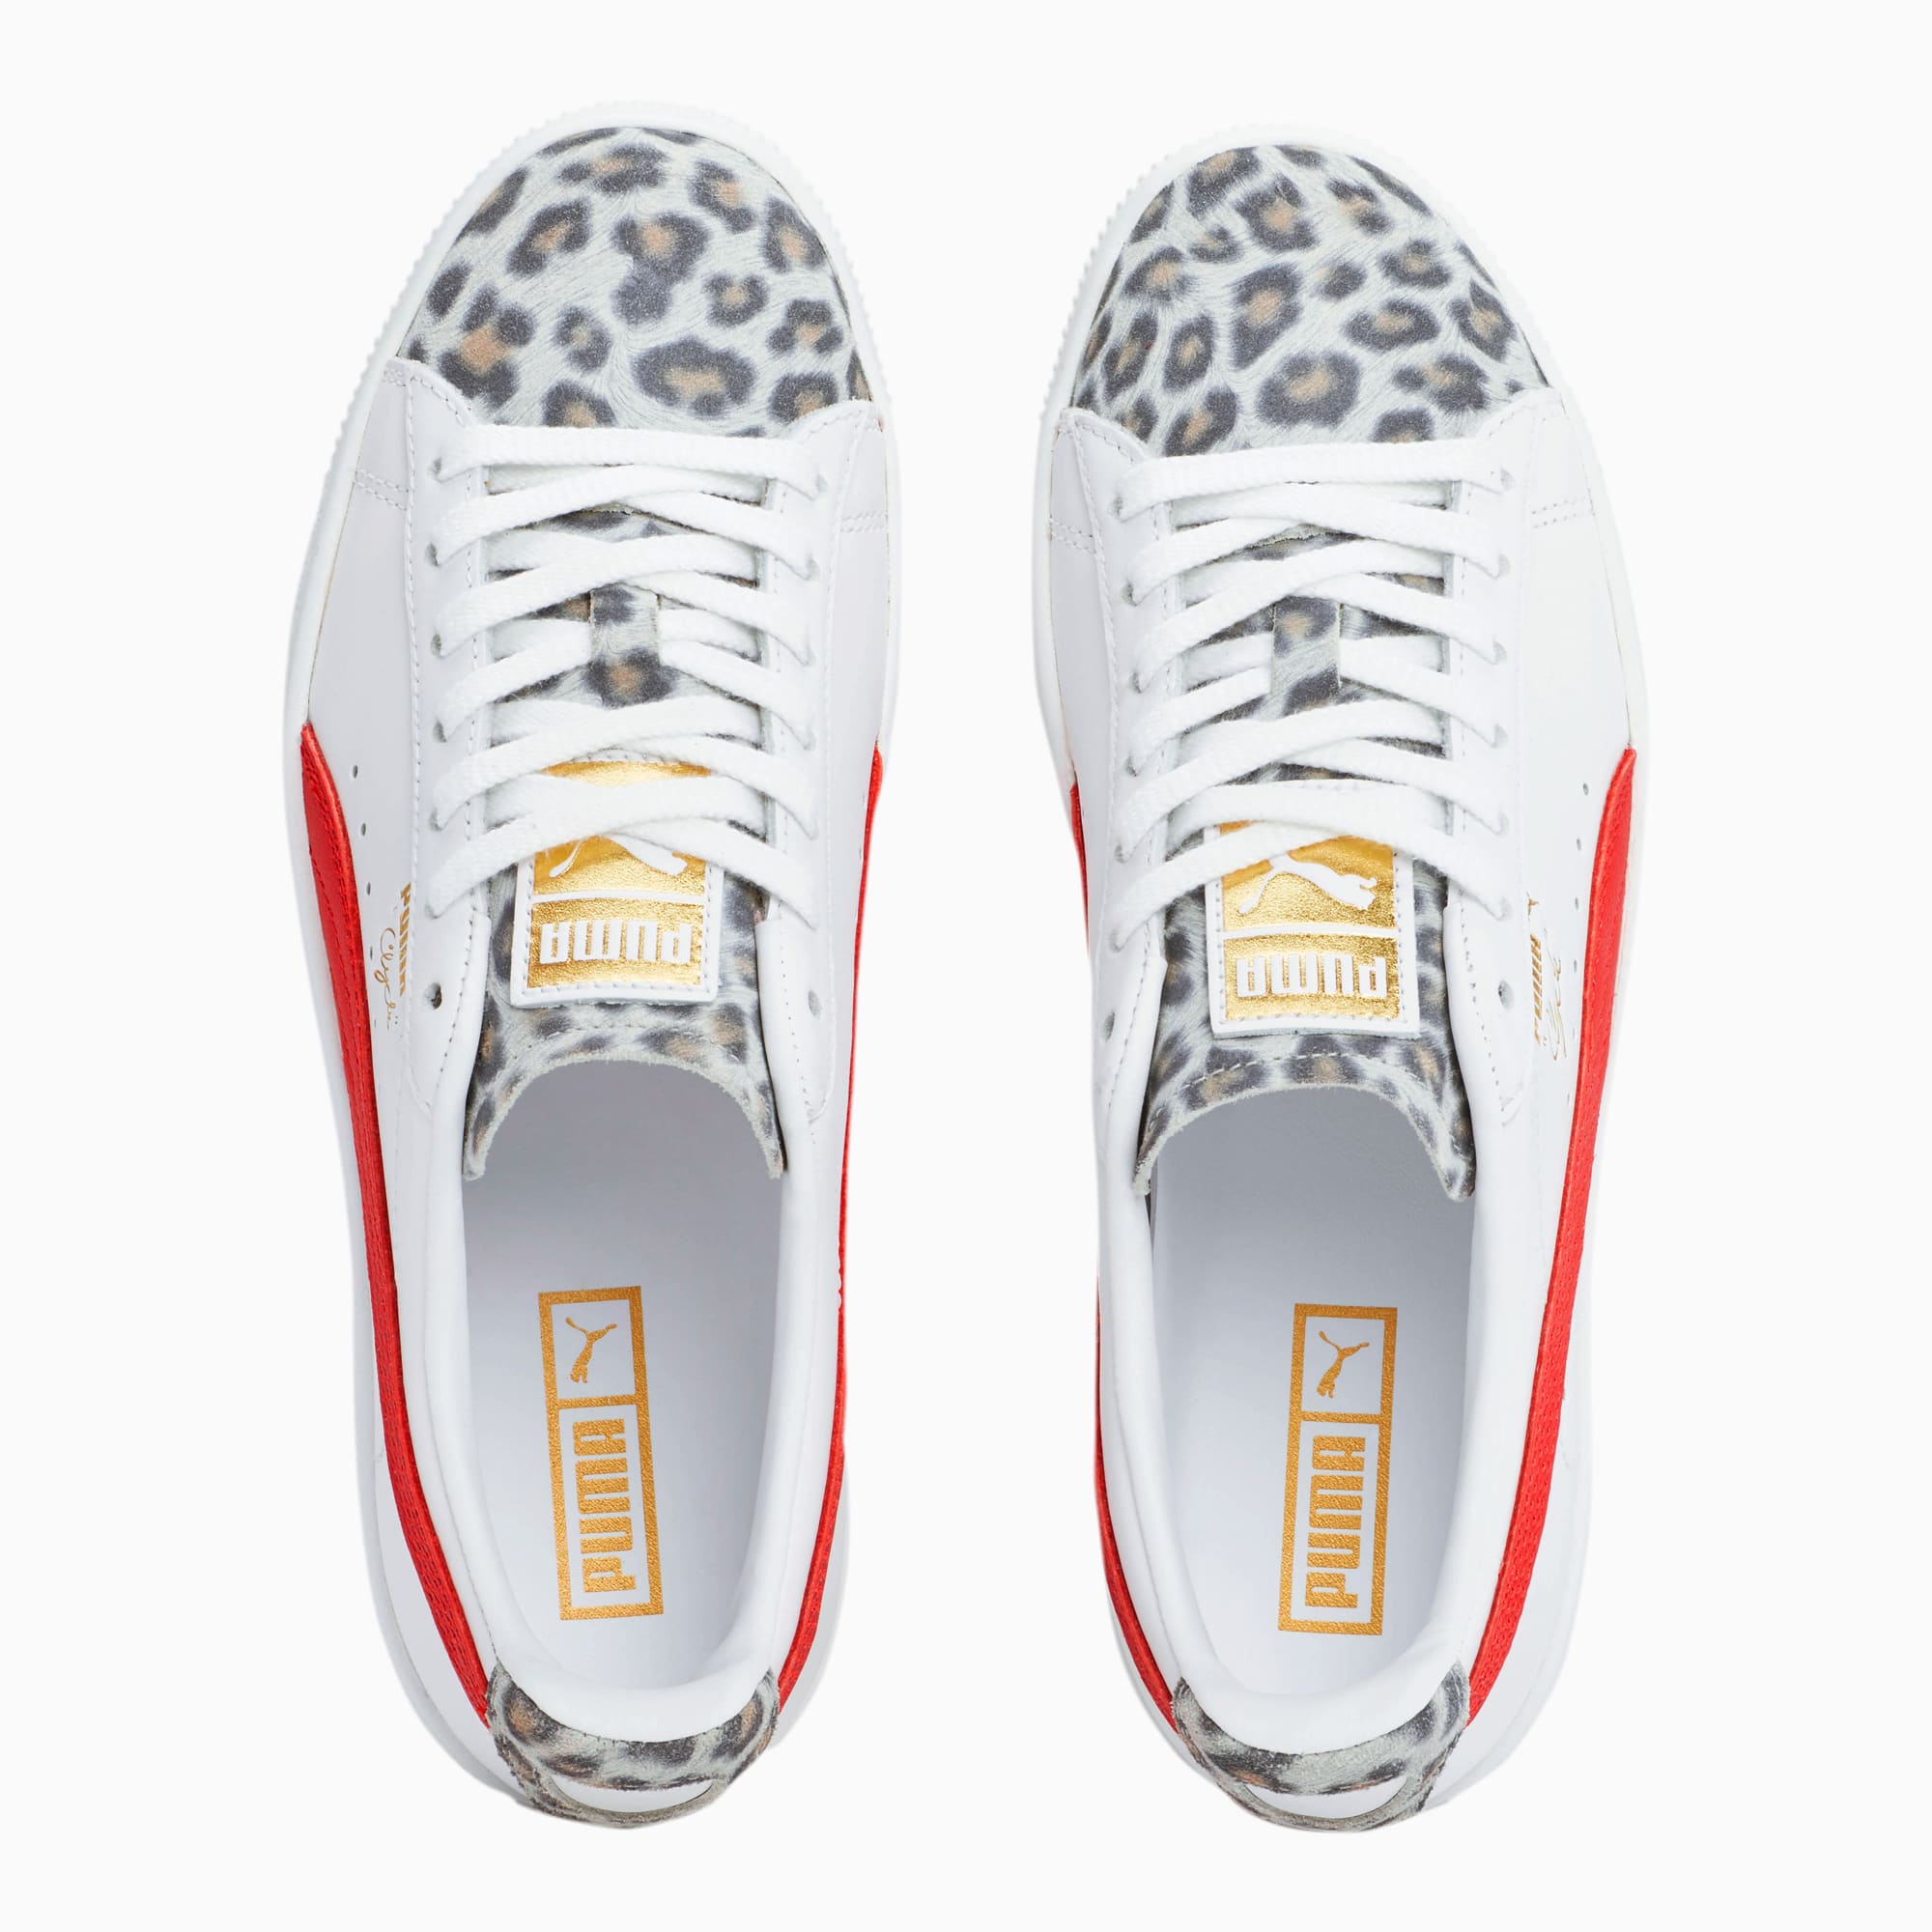 Clyde Leopard Women's Sneakers | PUMA US